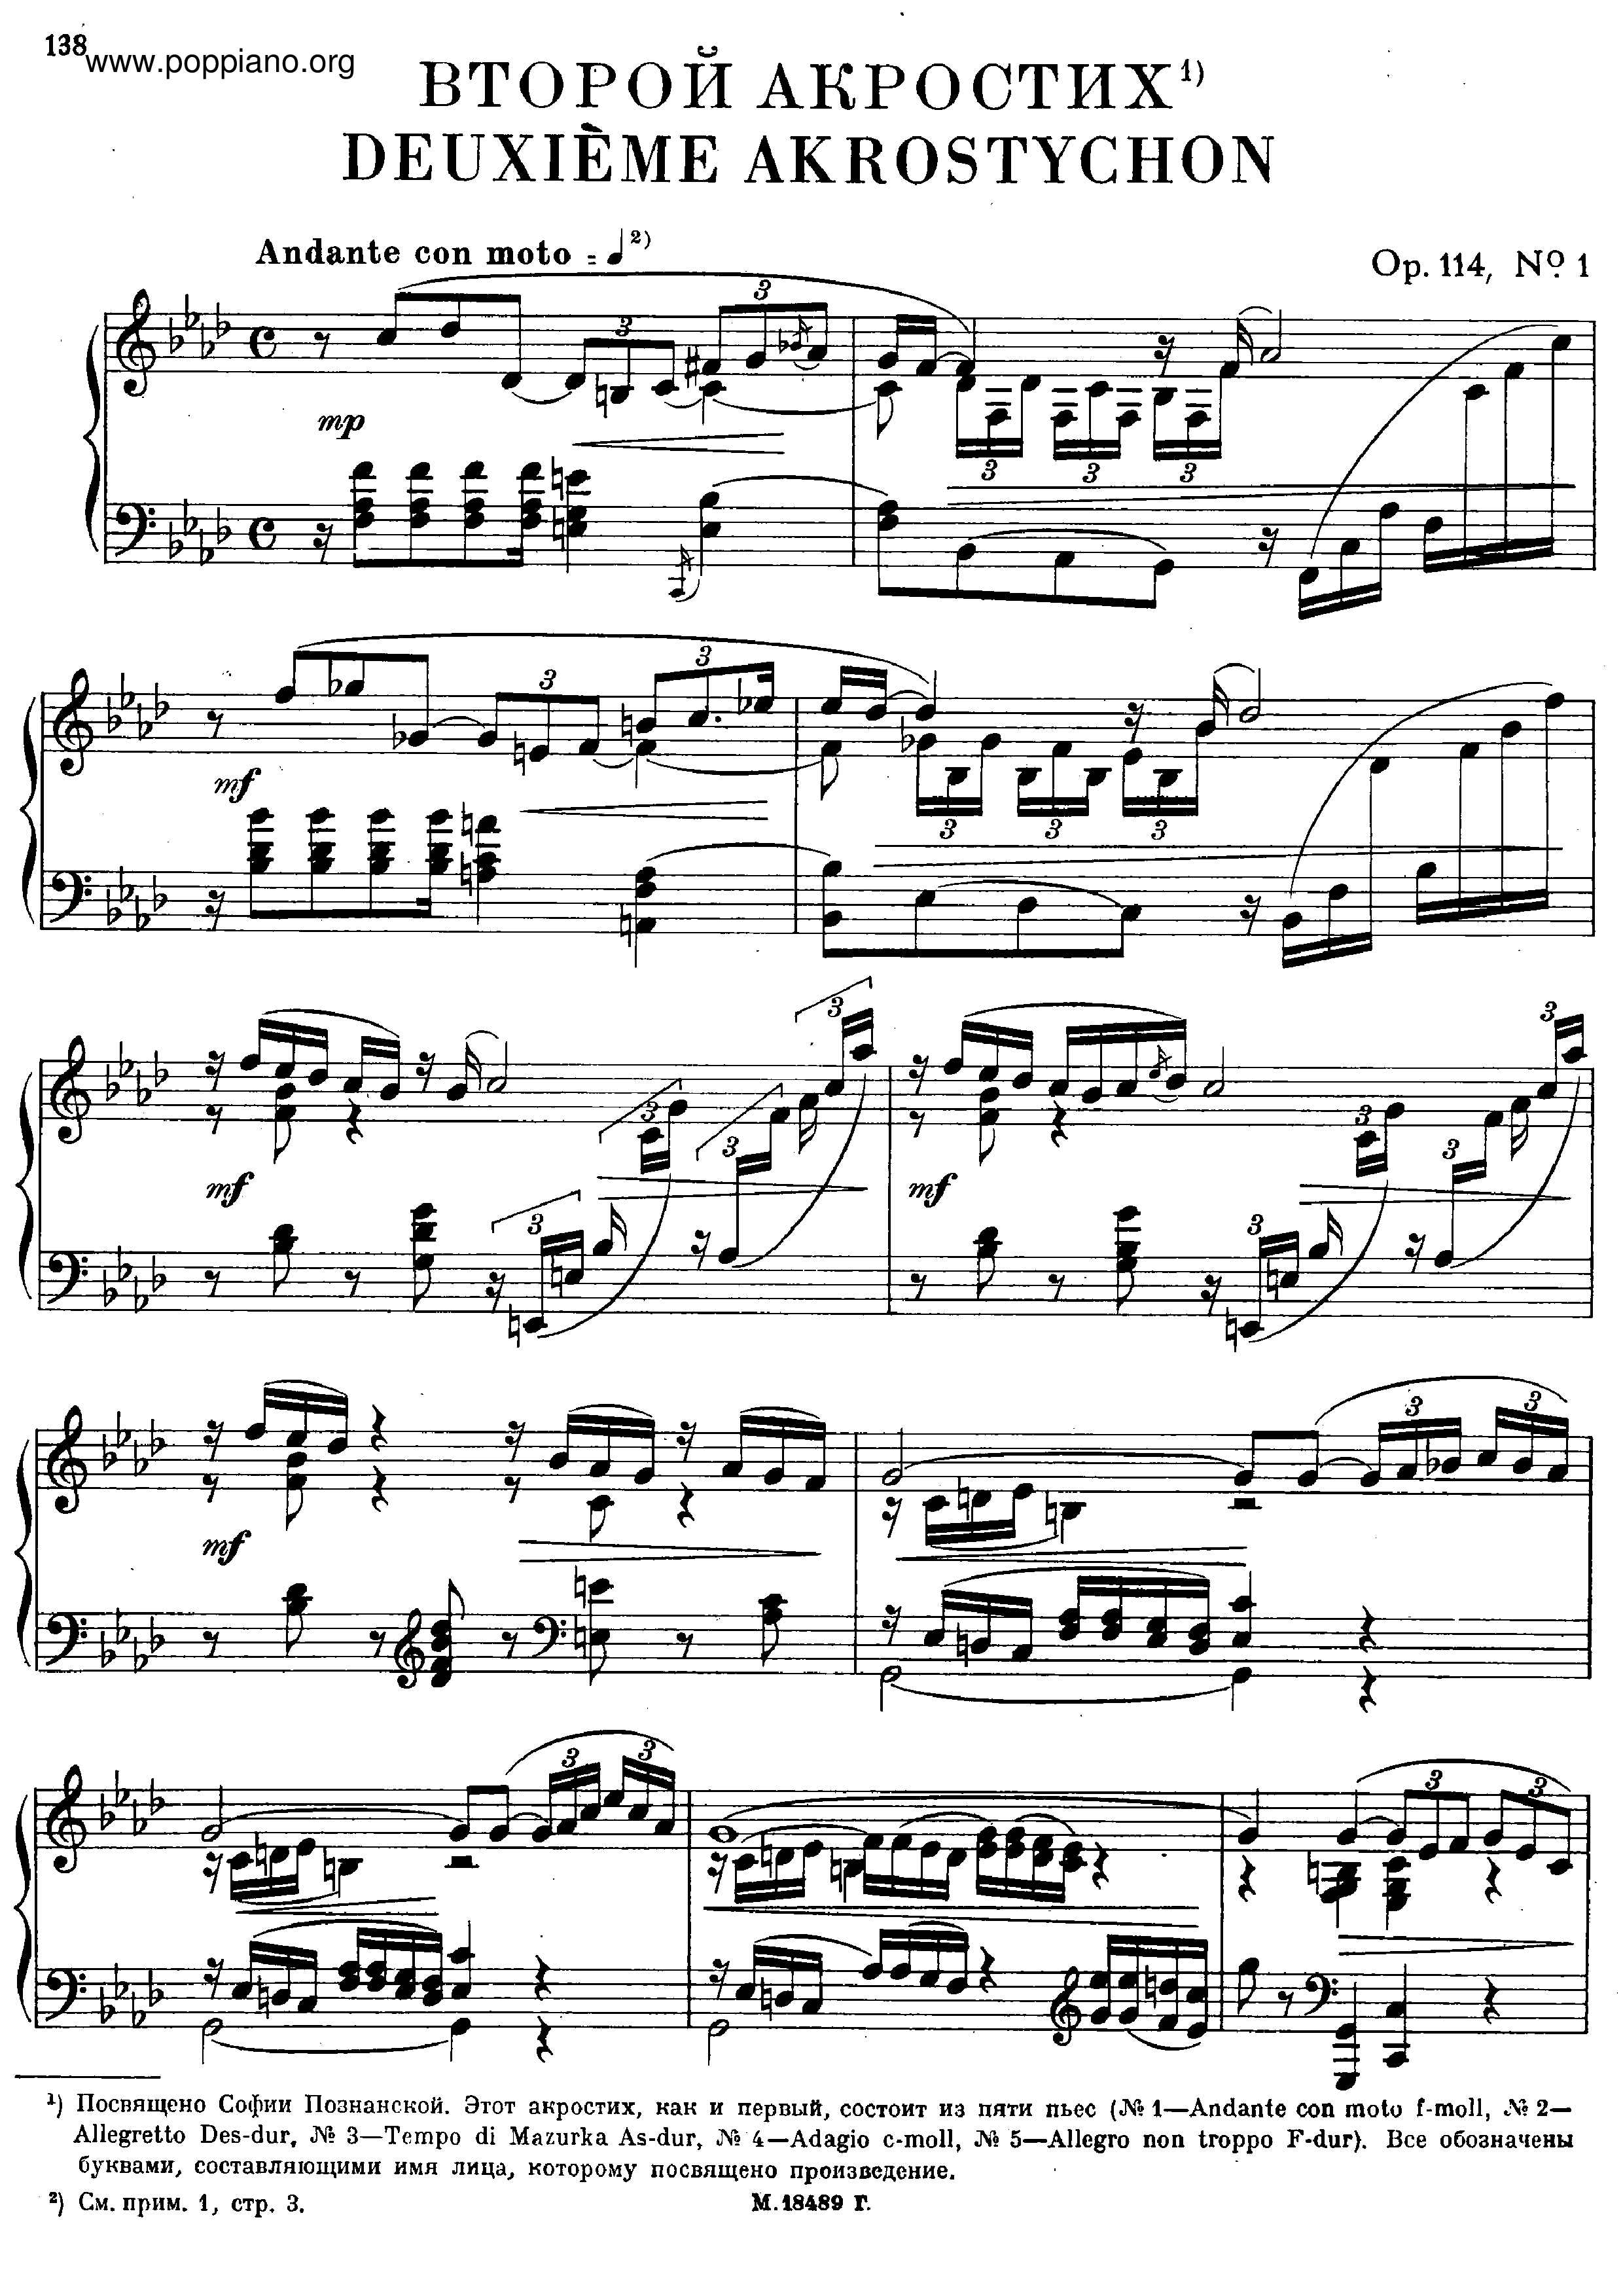 Acrostychon No.2, Op.114ピアノ譜